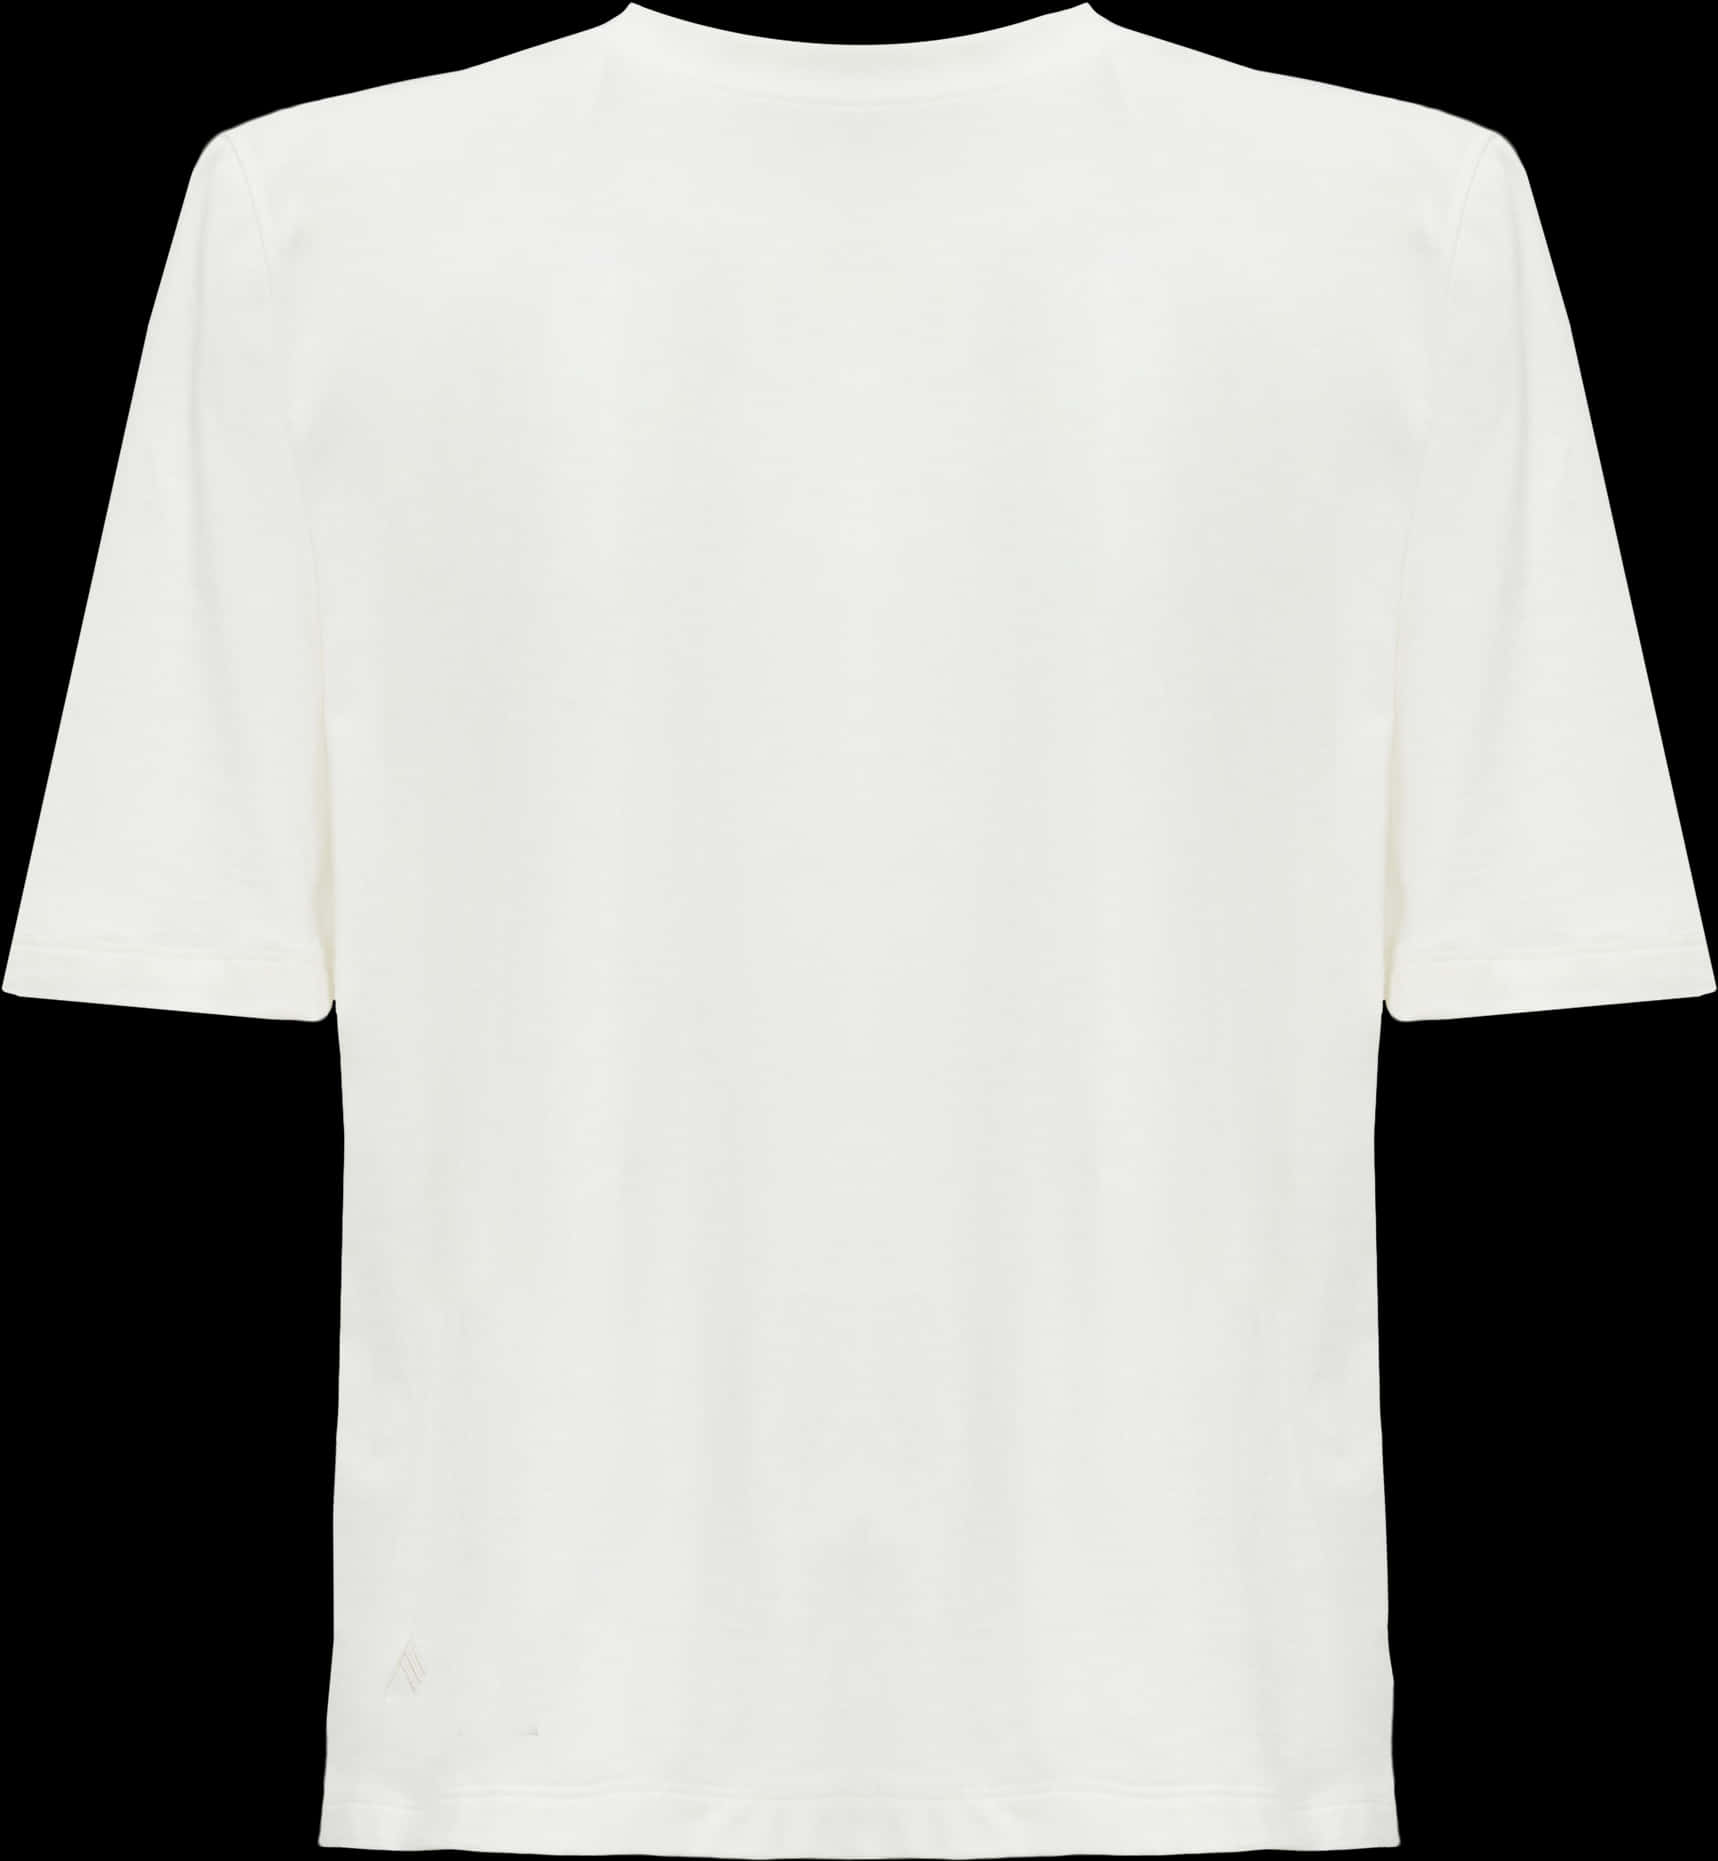 Plain White T Shirt Front View PNG image